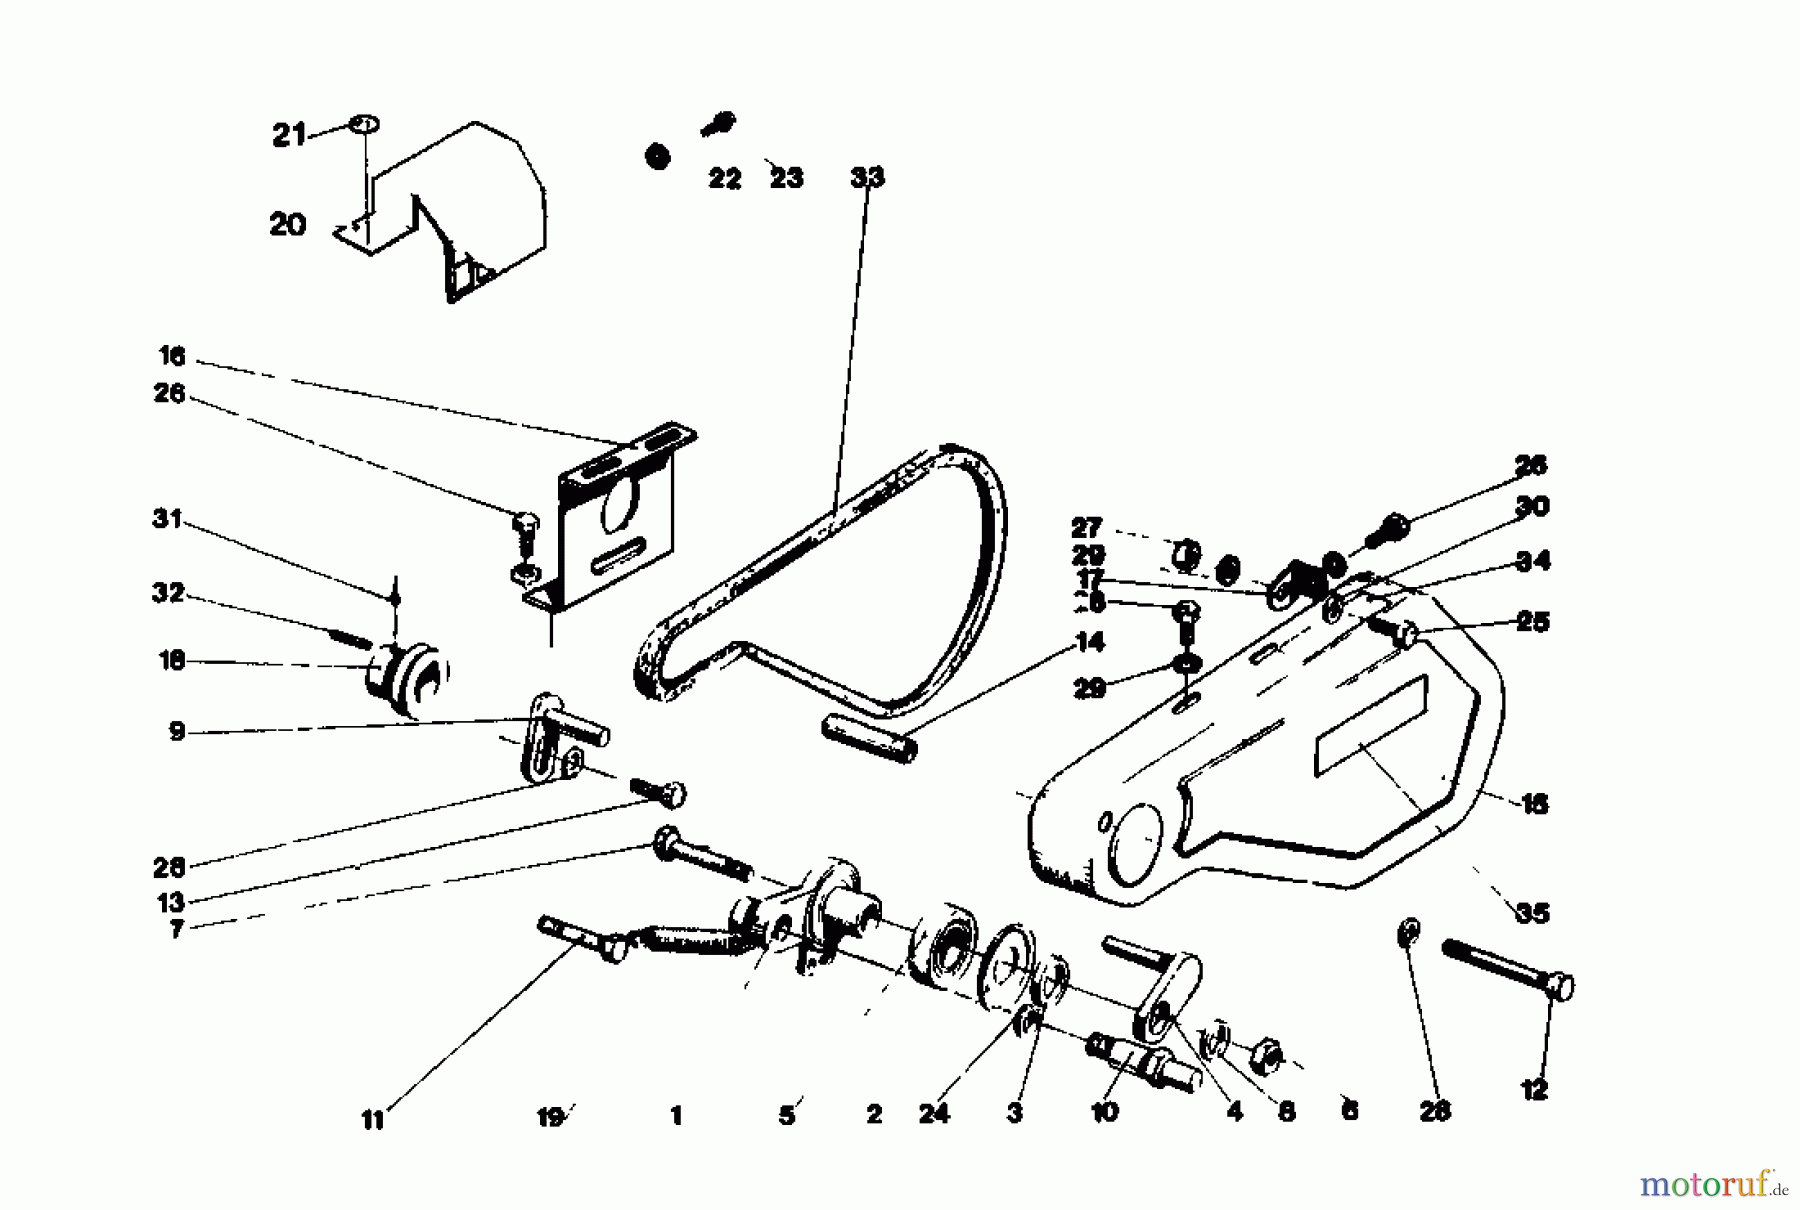  Gutbrod Motorhacken MB 60-30 07511.07  (1985) Fahrantrieb